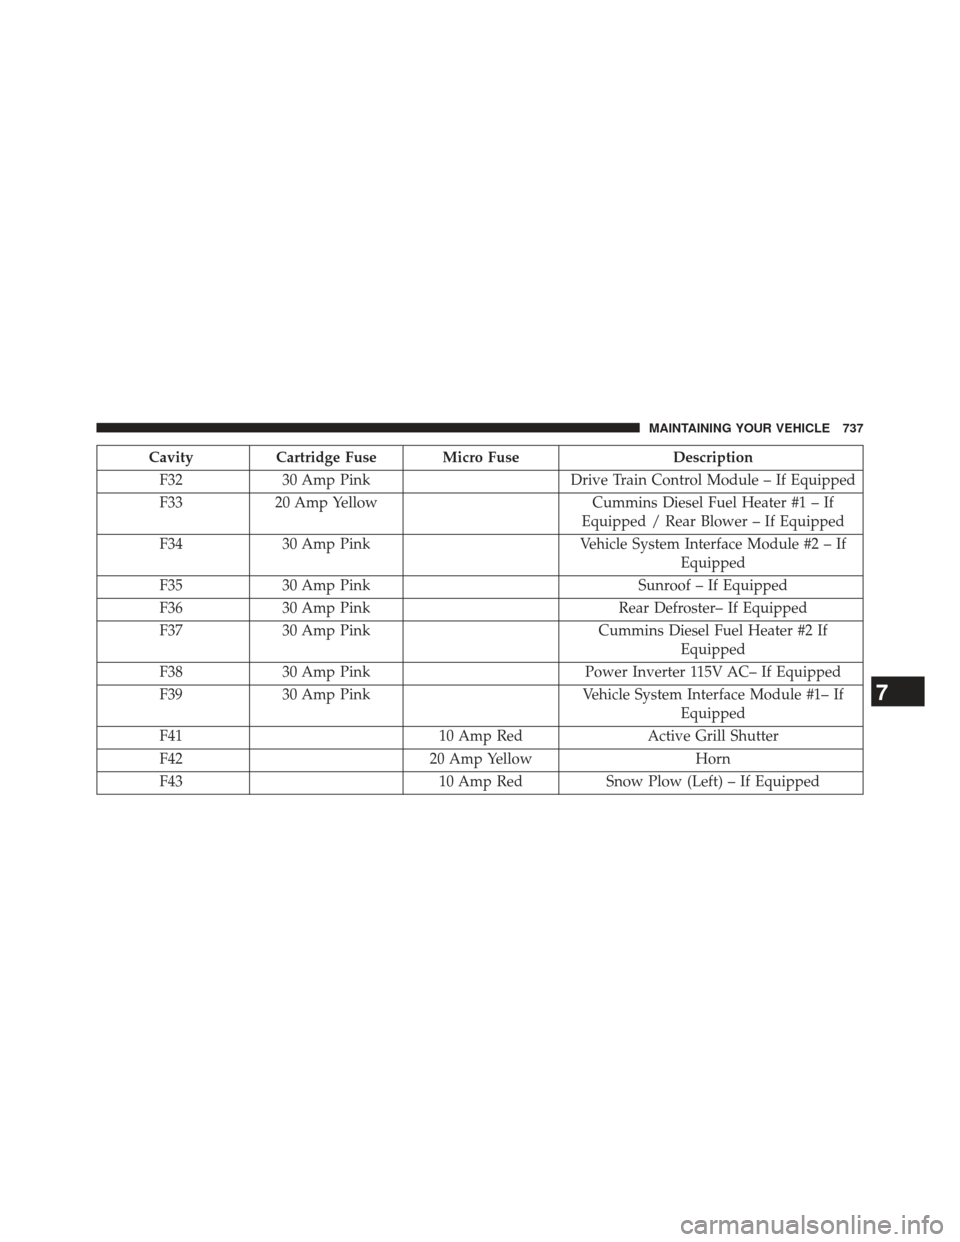 Ram 1500 2014 User Guide CavityCartridge Fuse Micro Fuse Description
F32 30 Amp Pink Drive Train Control Module – If Equipped
F33 20 Amp Yellow Cummins Diesel Fuel Heater #1 – If
Equipped / Rear Blower – If Equipped
F34